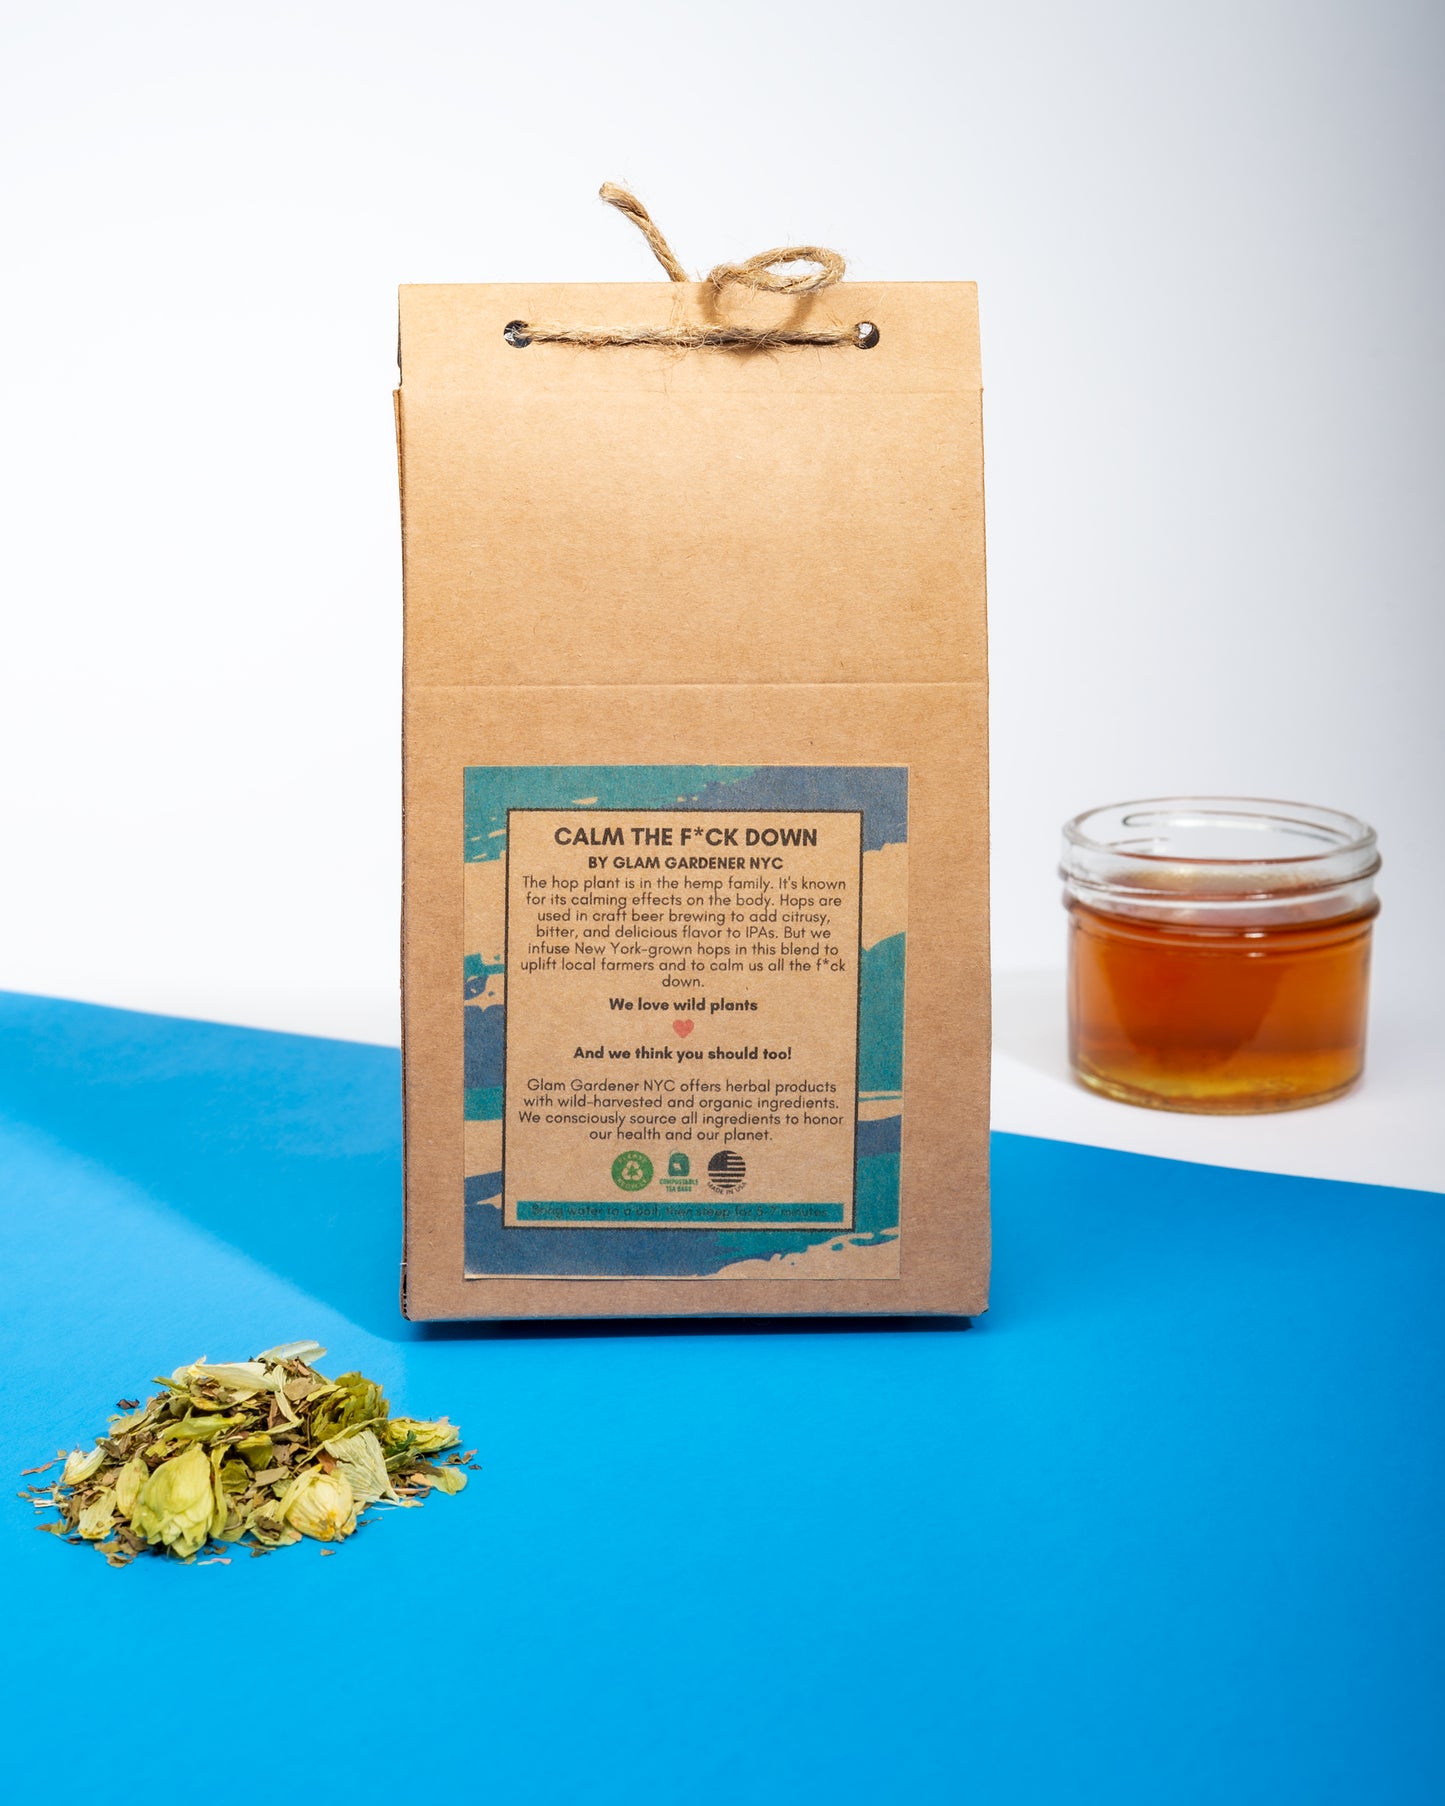 Calm the f*ck down bagged herbal tea (designed to calm)